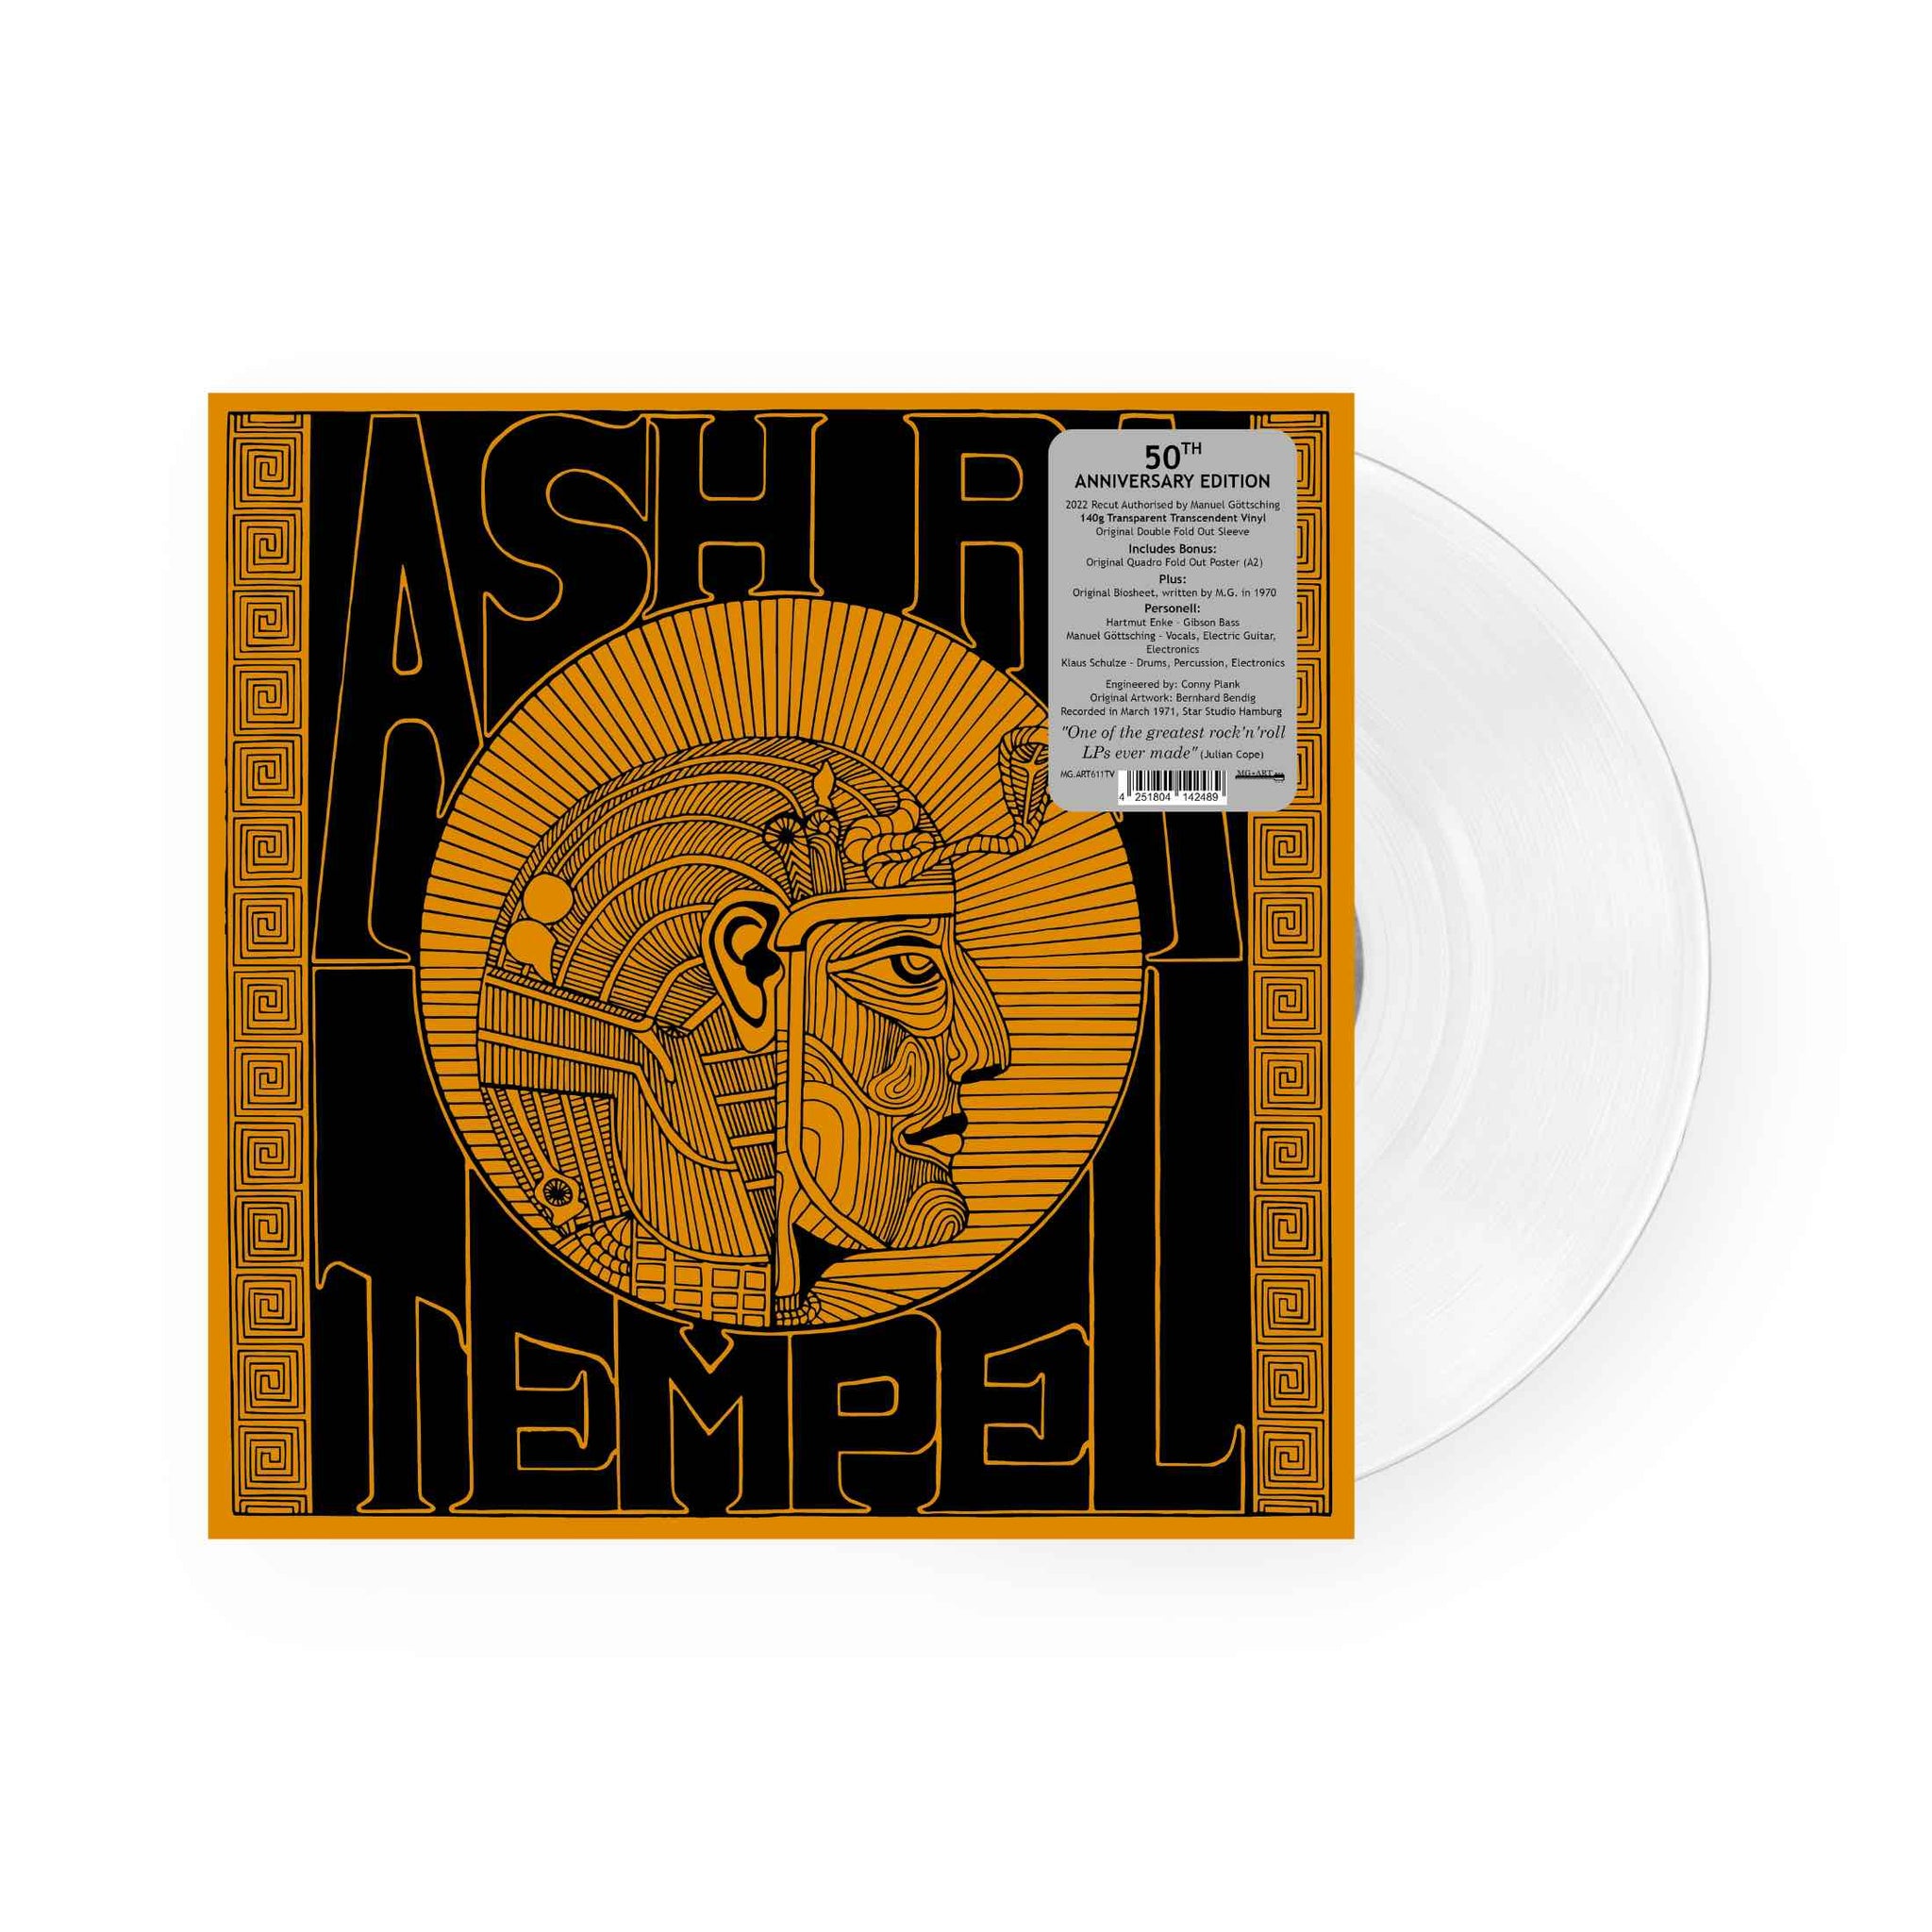 Ash Ra Tempel - Ash Ra Tempel LP (Clear Vinyl, 50th anniversary)